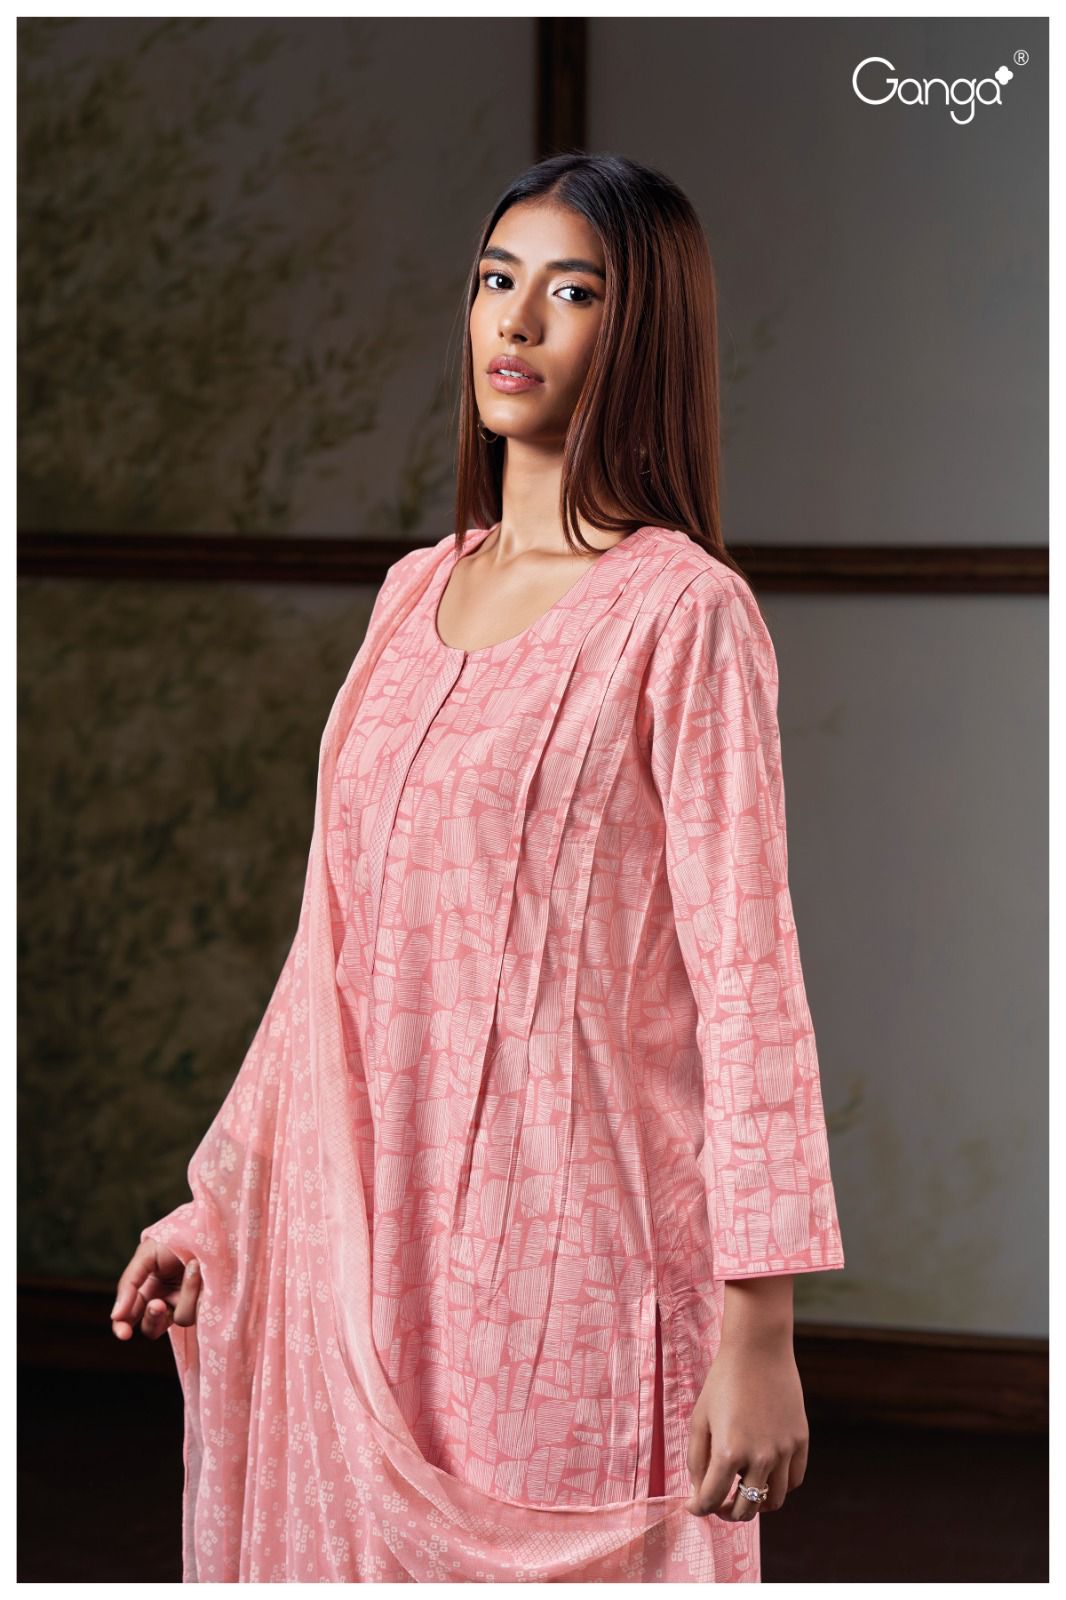 Hibah 2548 Ganga Premium Cotton Plazzo Style Suits Wholesaler India